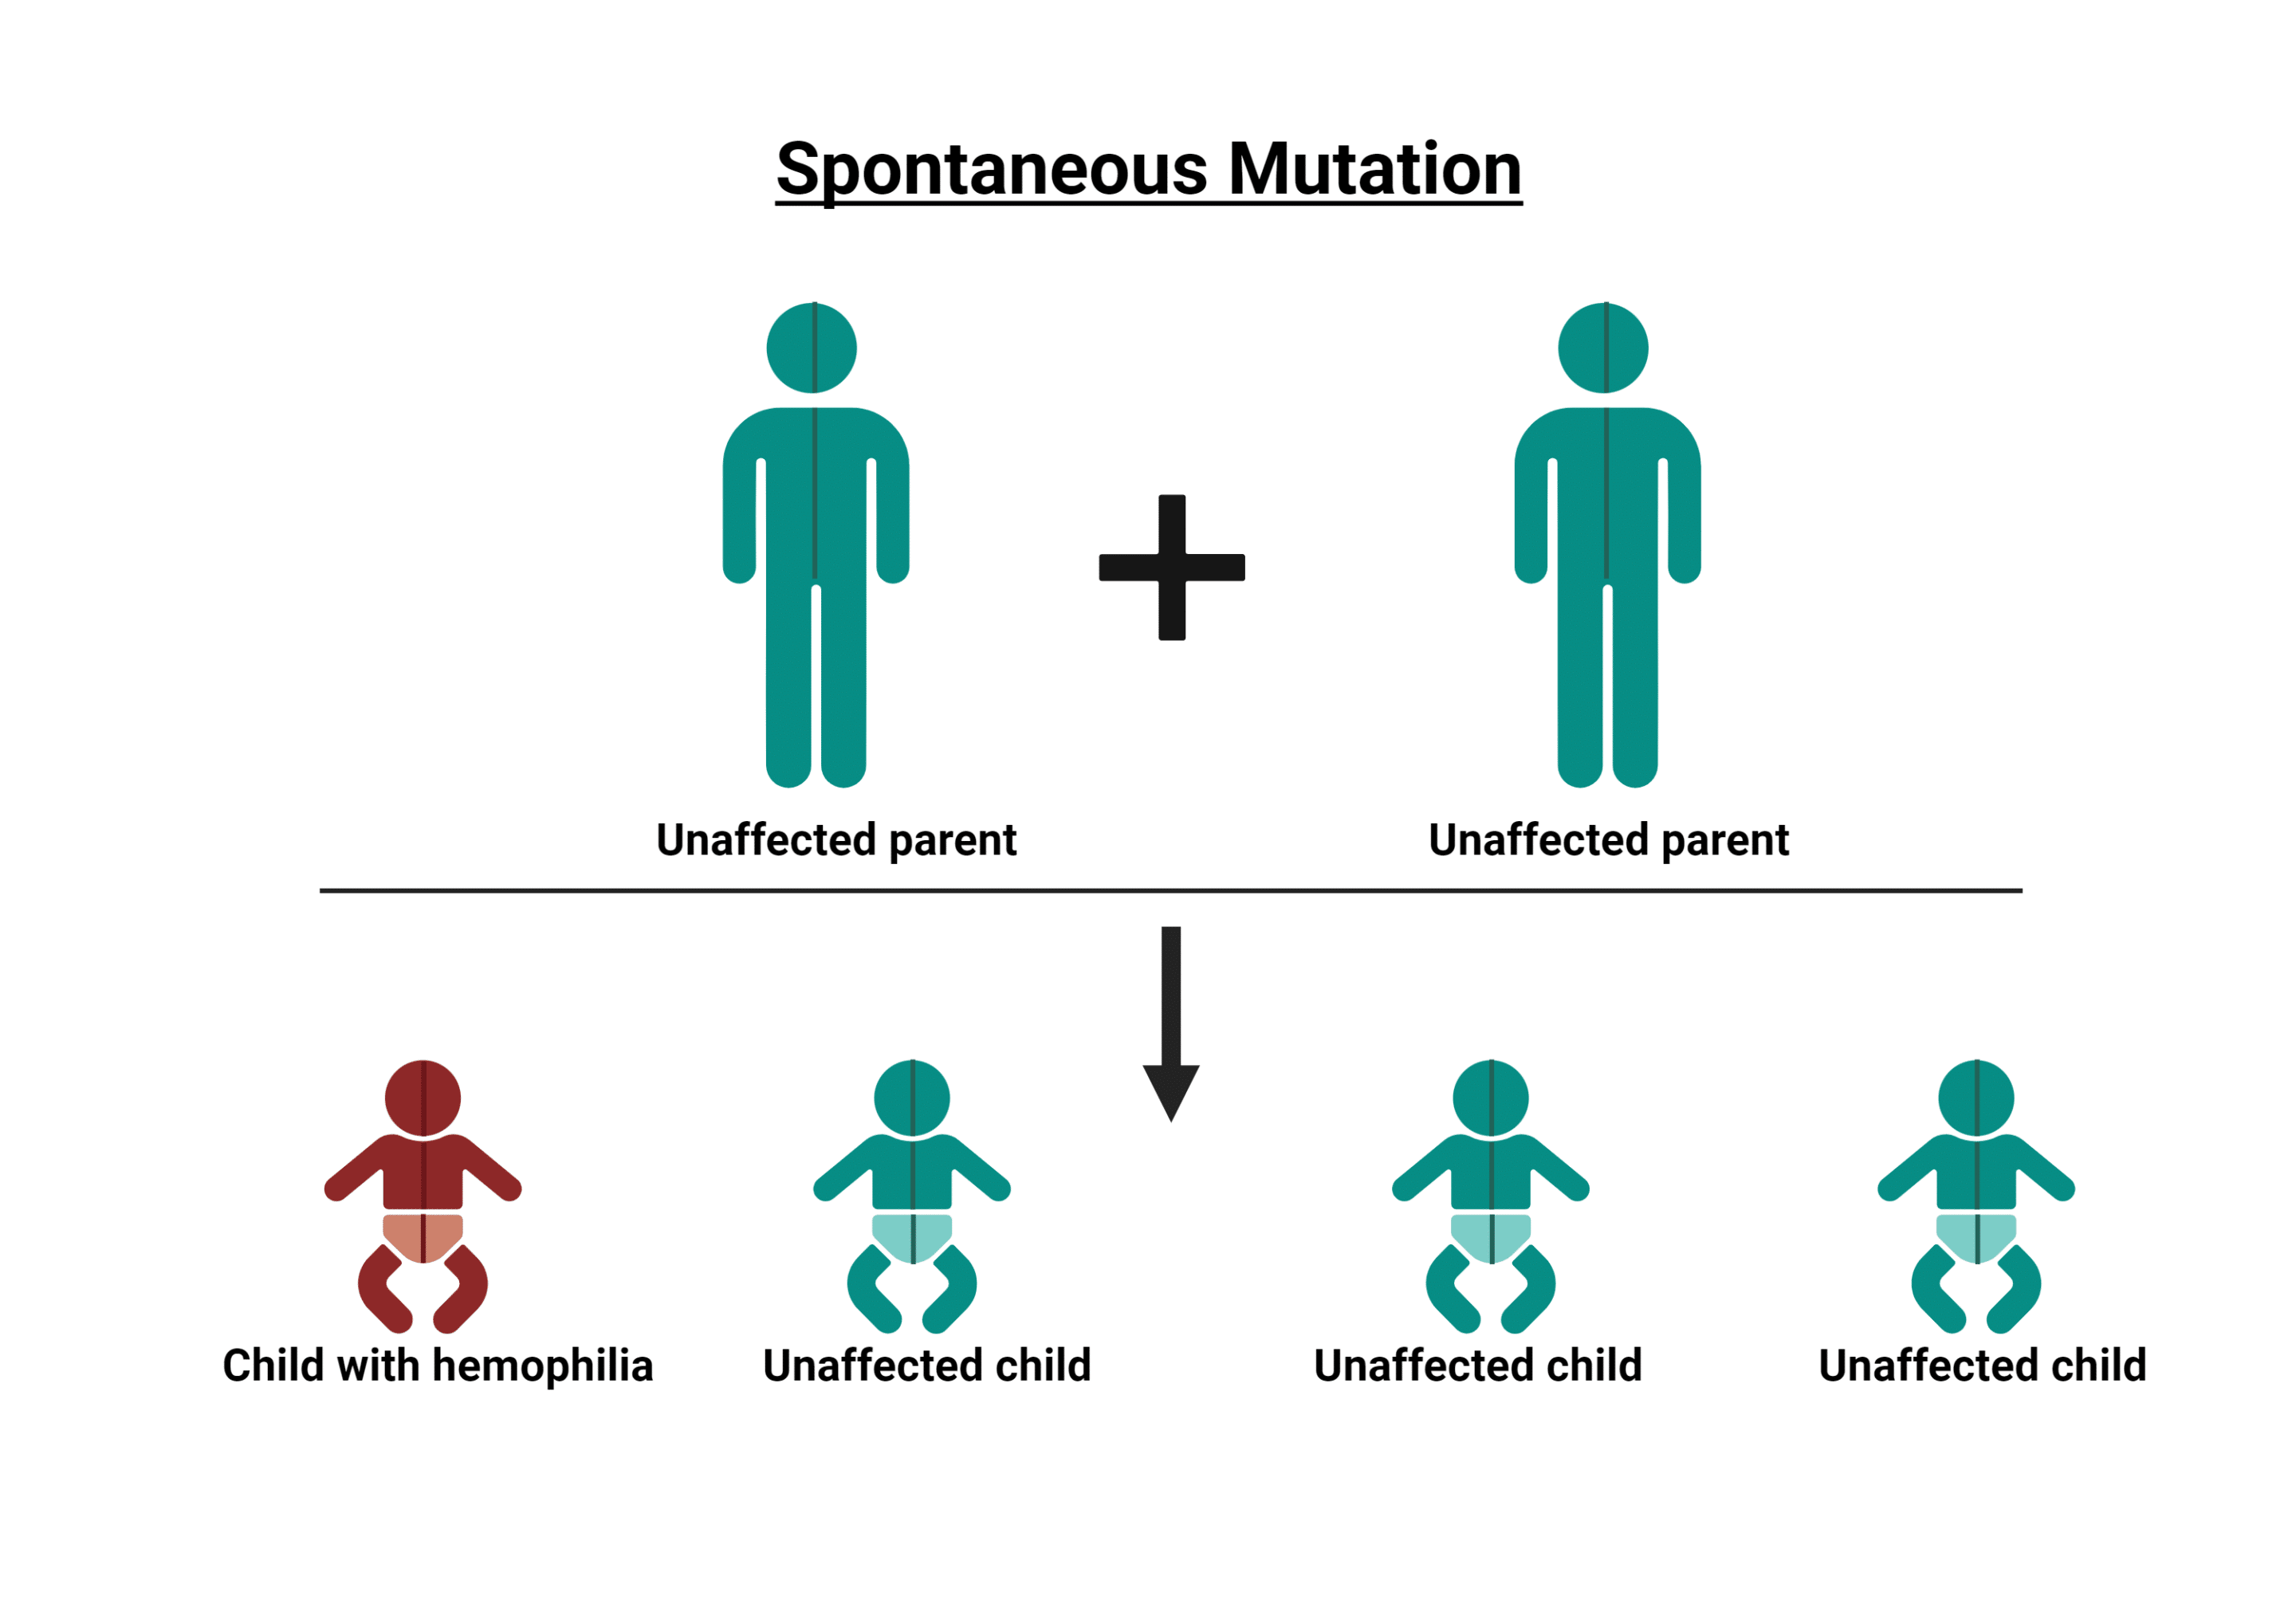 Spontaneous mutation - child born with hemophilia